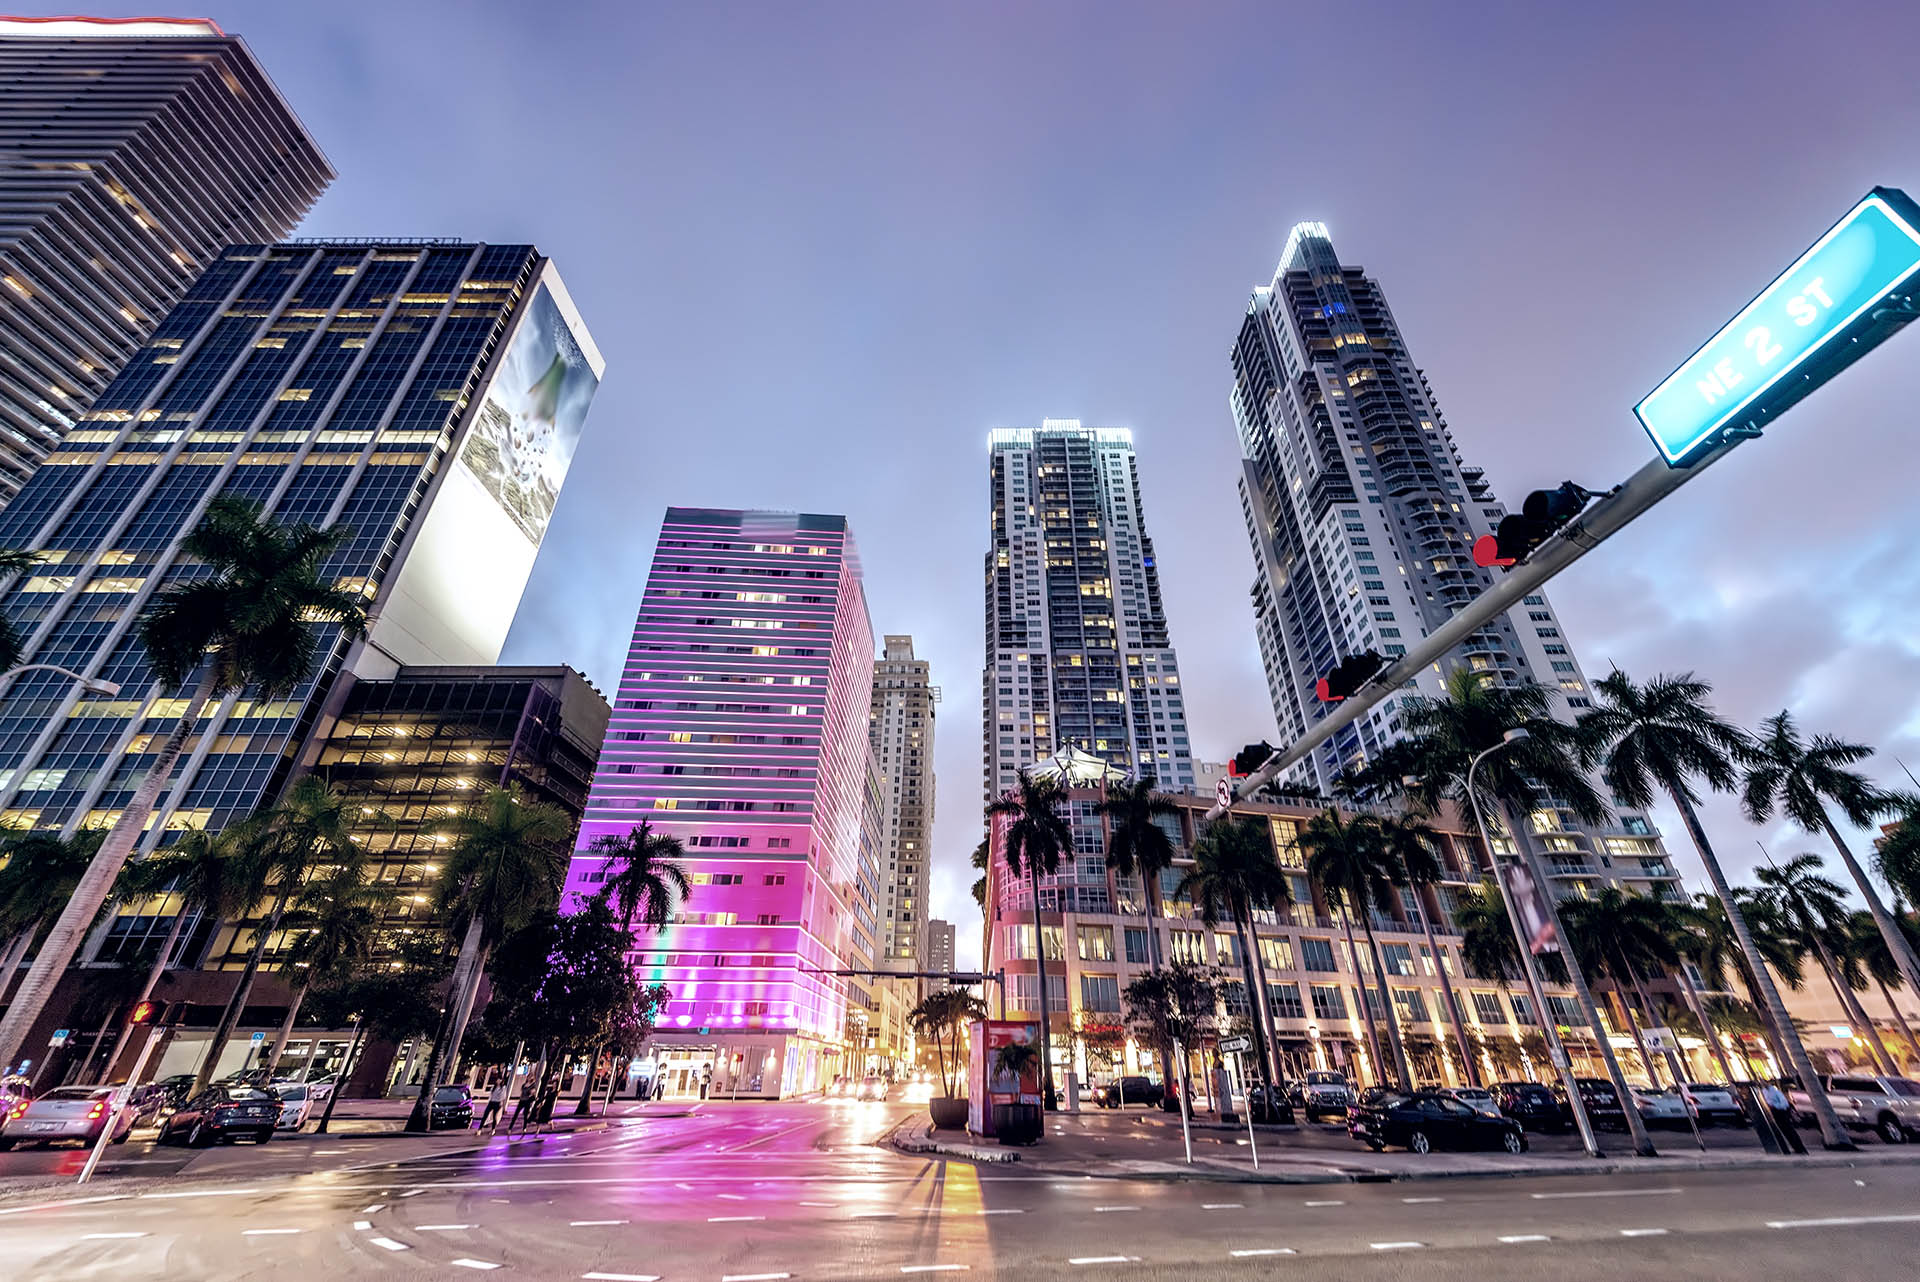 El centro de Miami (Shutterstock)